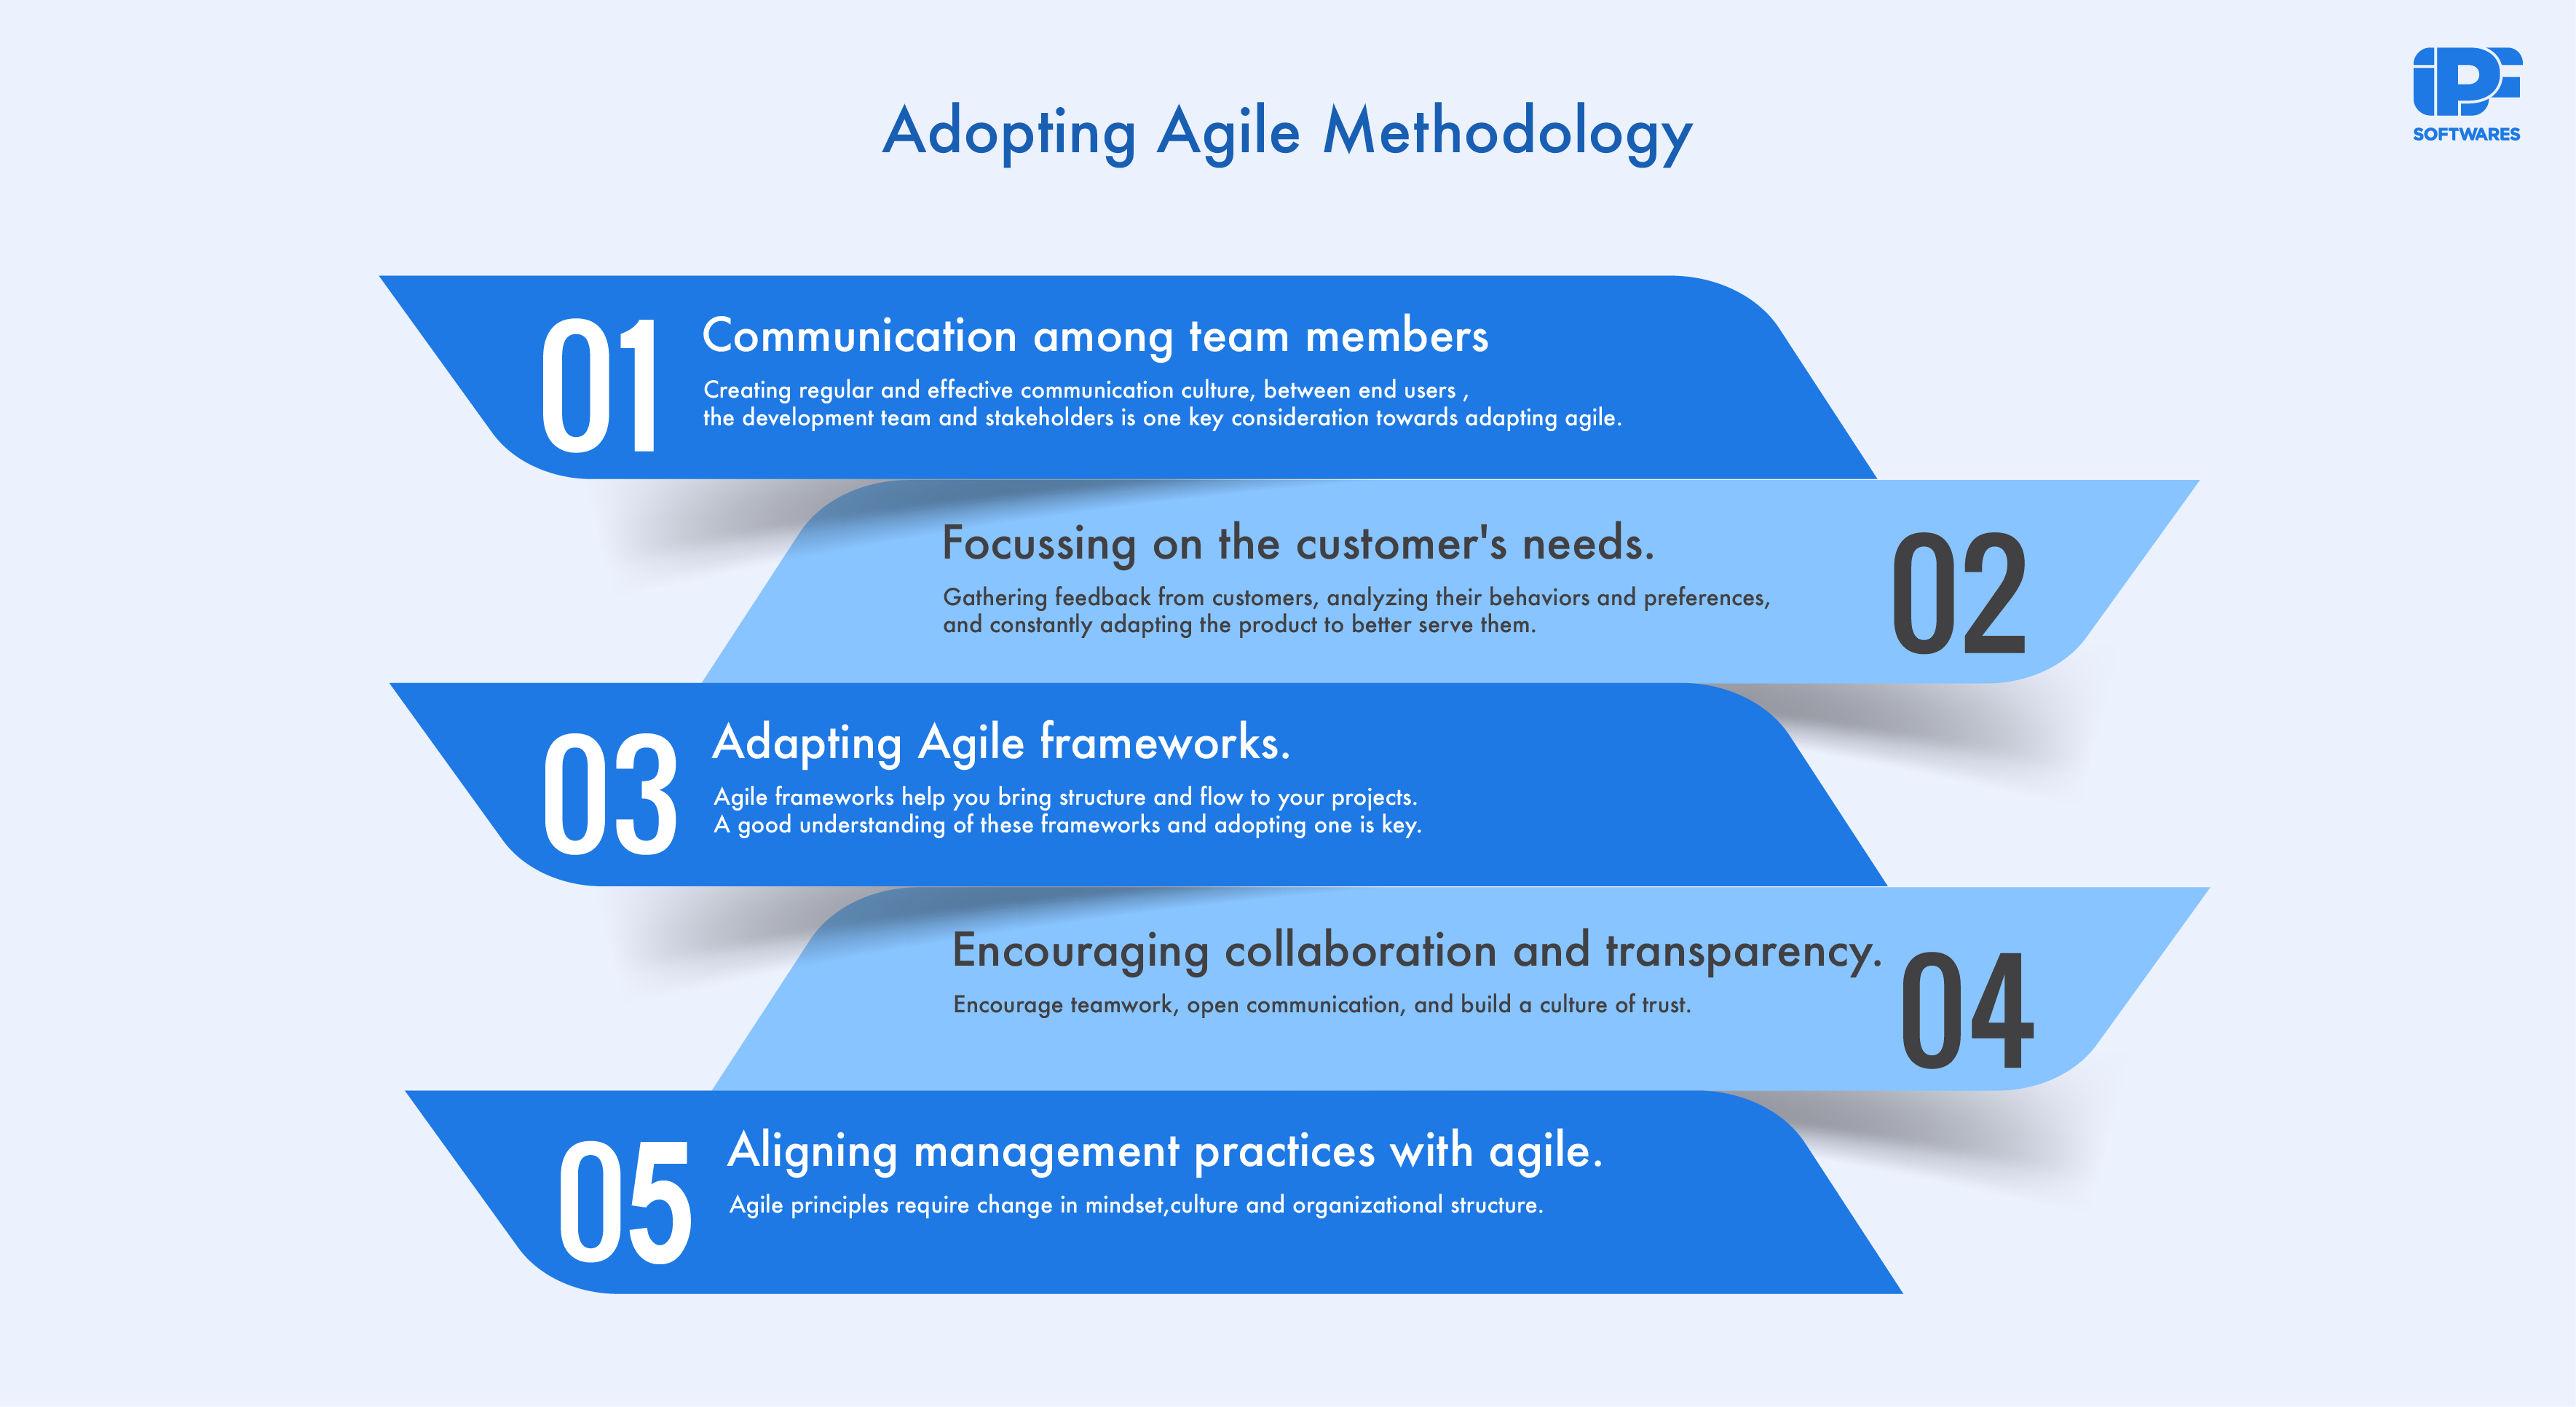 Key considerations in Adopting Agile Methodology